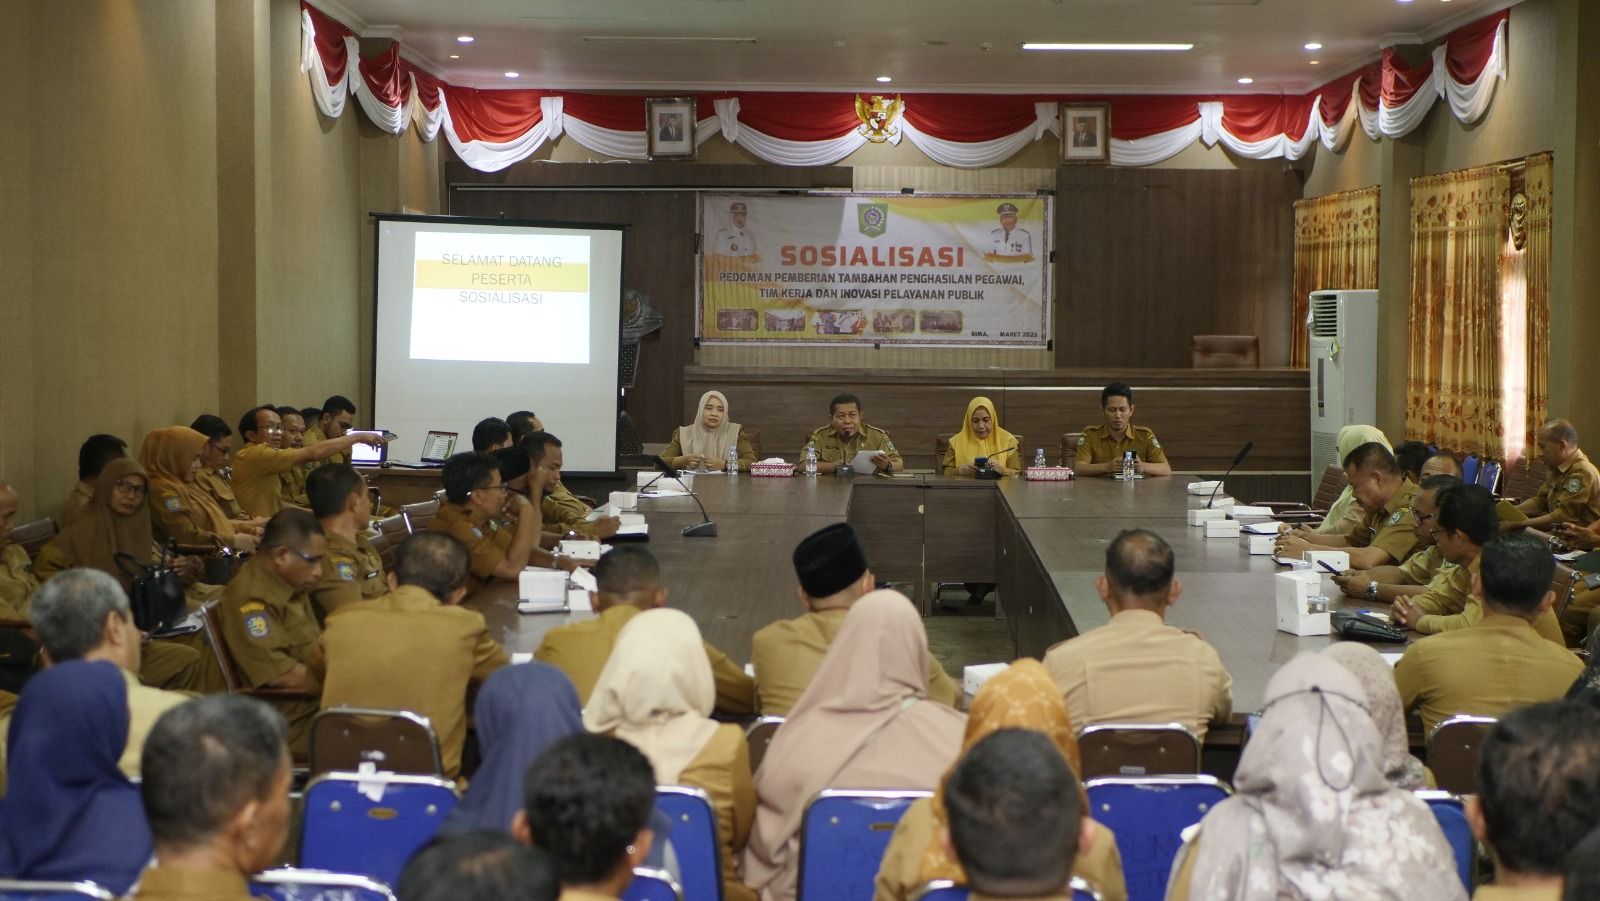 Inilah 3 Agenda Kerja Yang Dihelat Pada Sosialisasi Pemkab Bima, Nusa Tenggara Barat